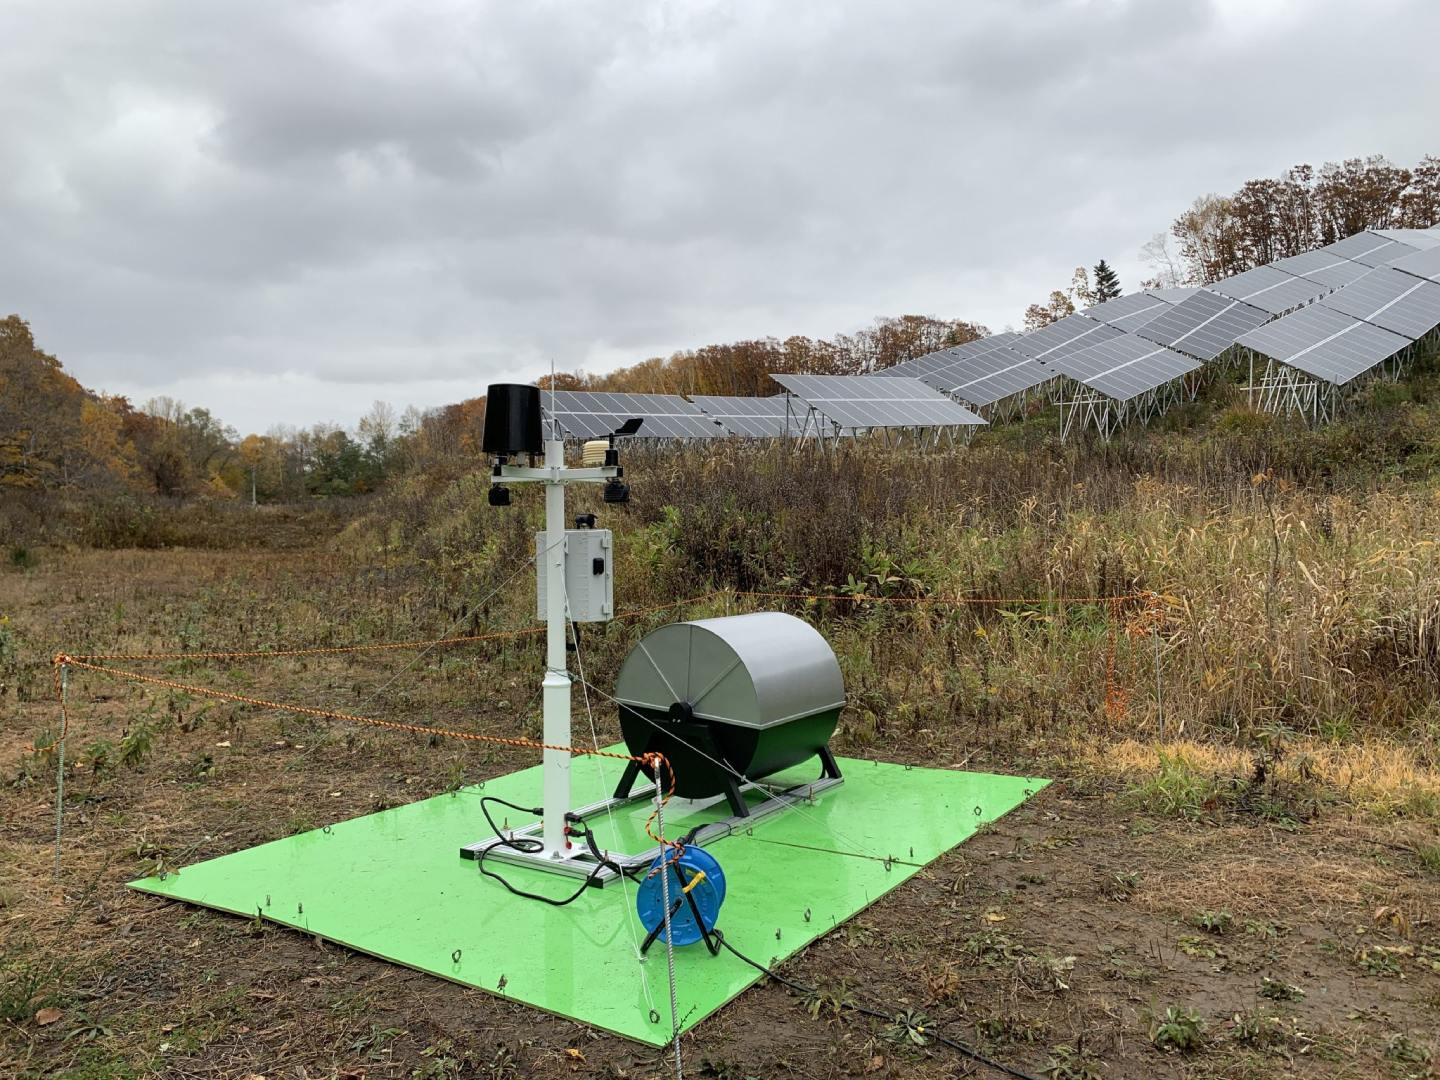 HEISHA D80 for solar panel farm inspection in Sapporo